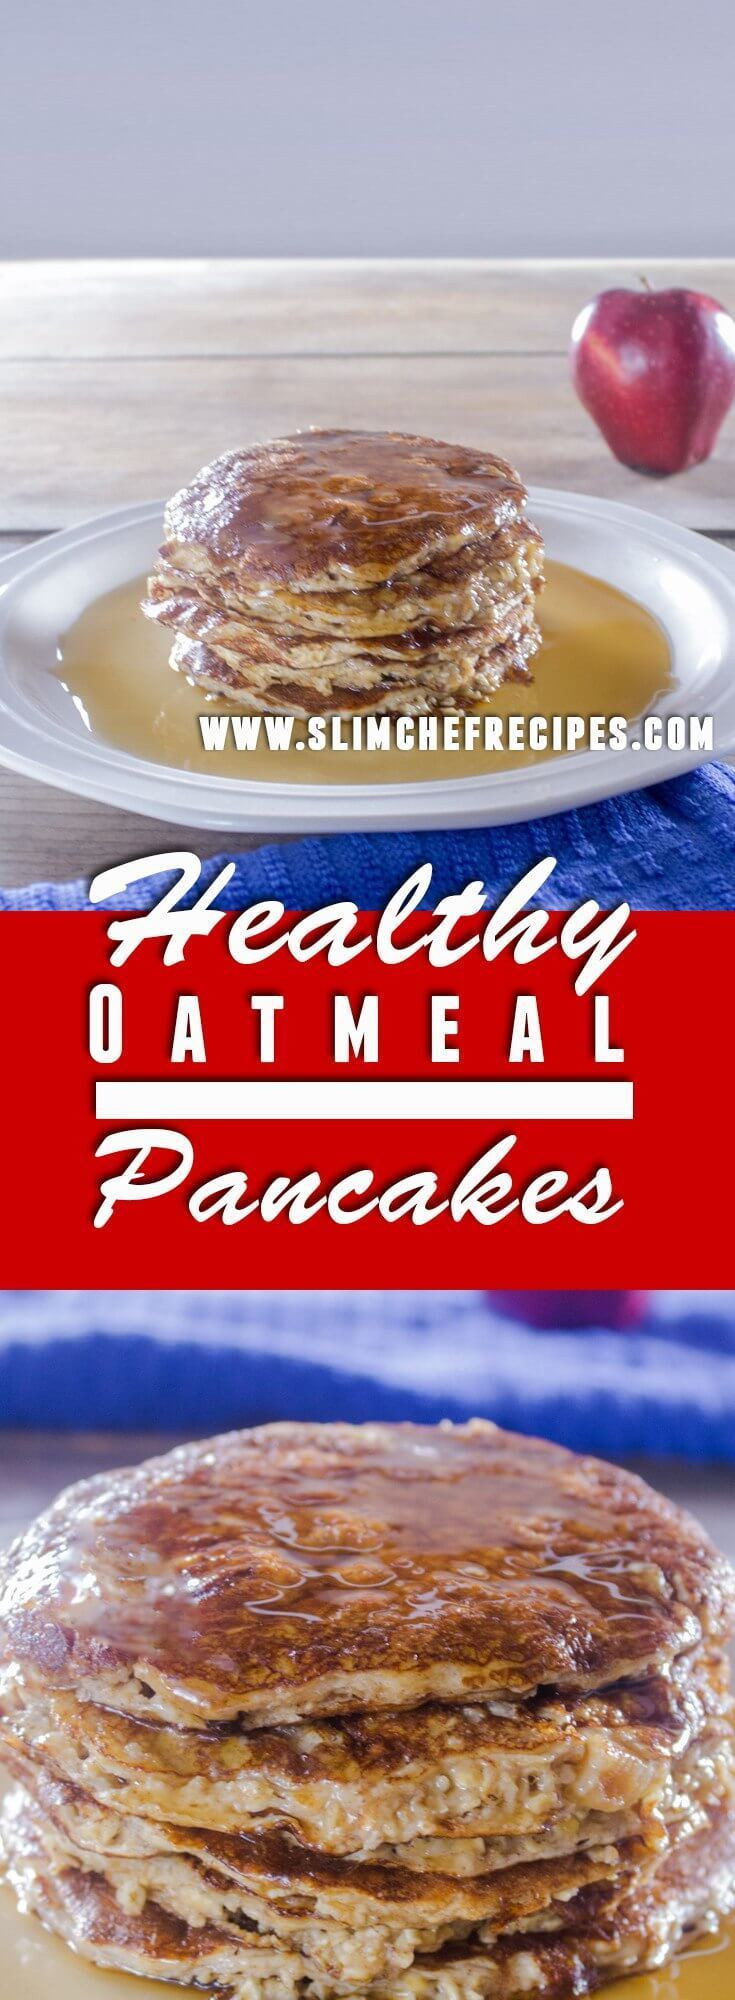 Oatmeal Pancakes No Flour
 Healthy oatmeal pancake recipe no flour Protein rich